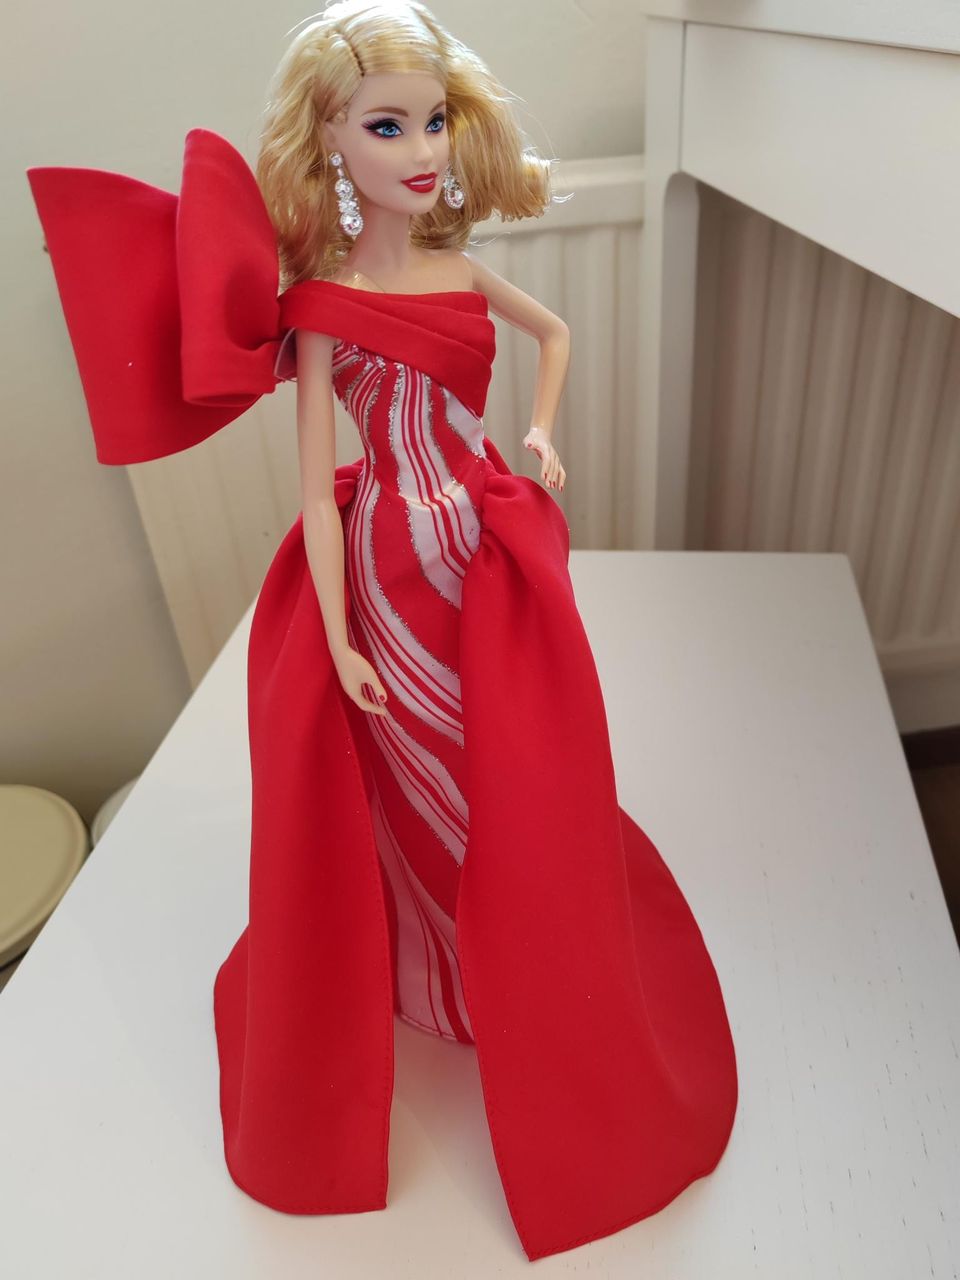 Holiday barbie 2019